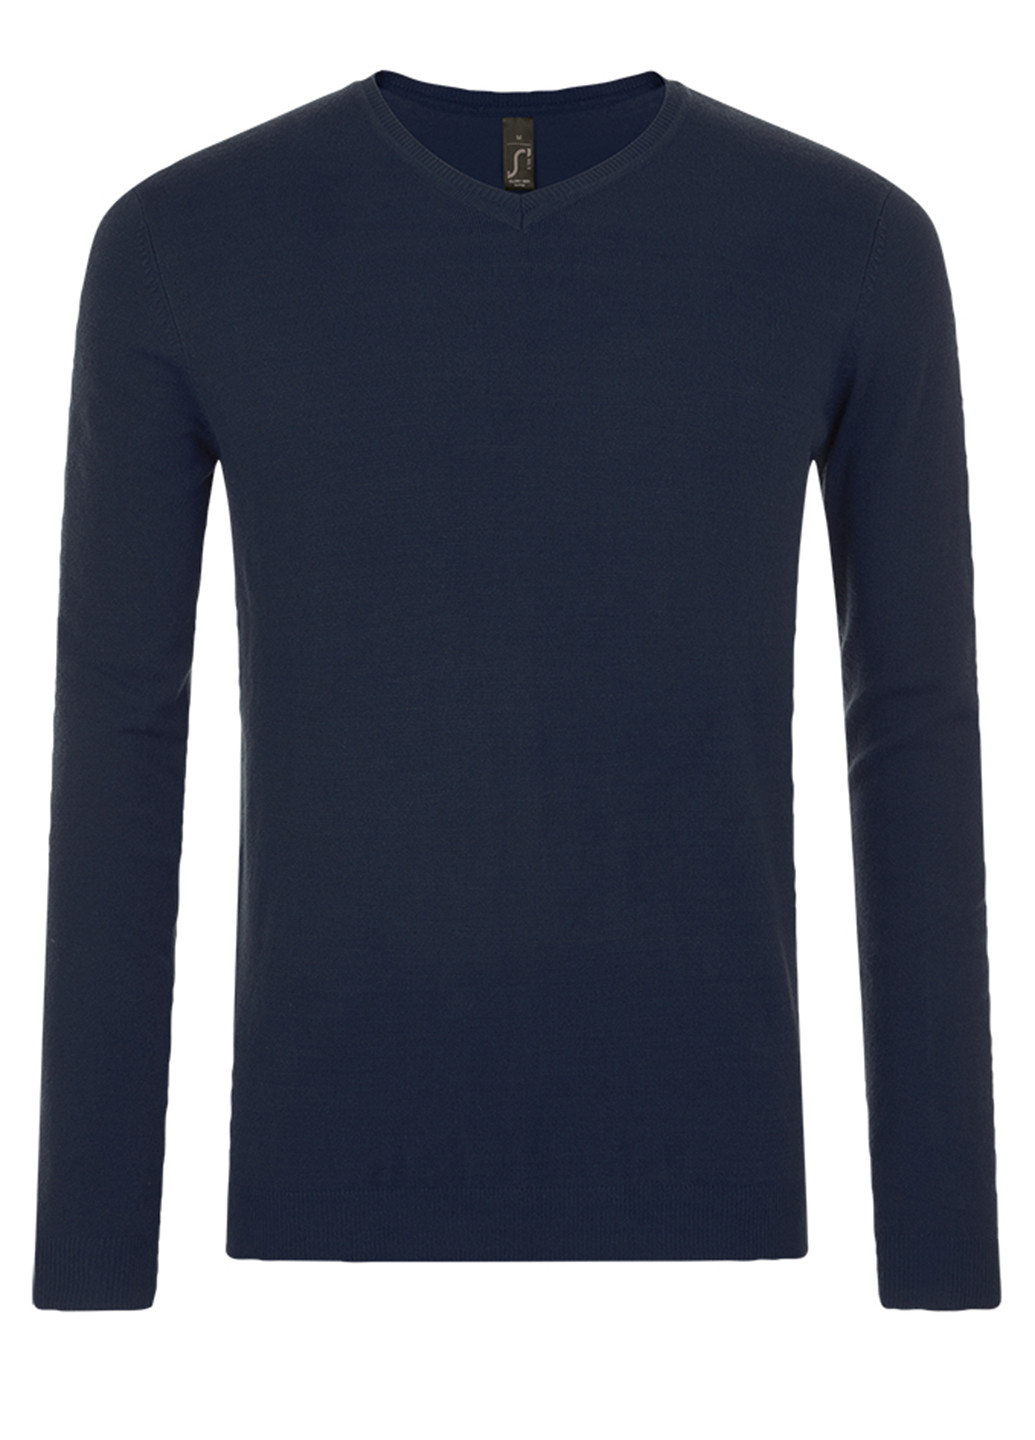 Темно-синий демисезонный пуловер пуловер Sol's